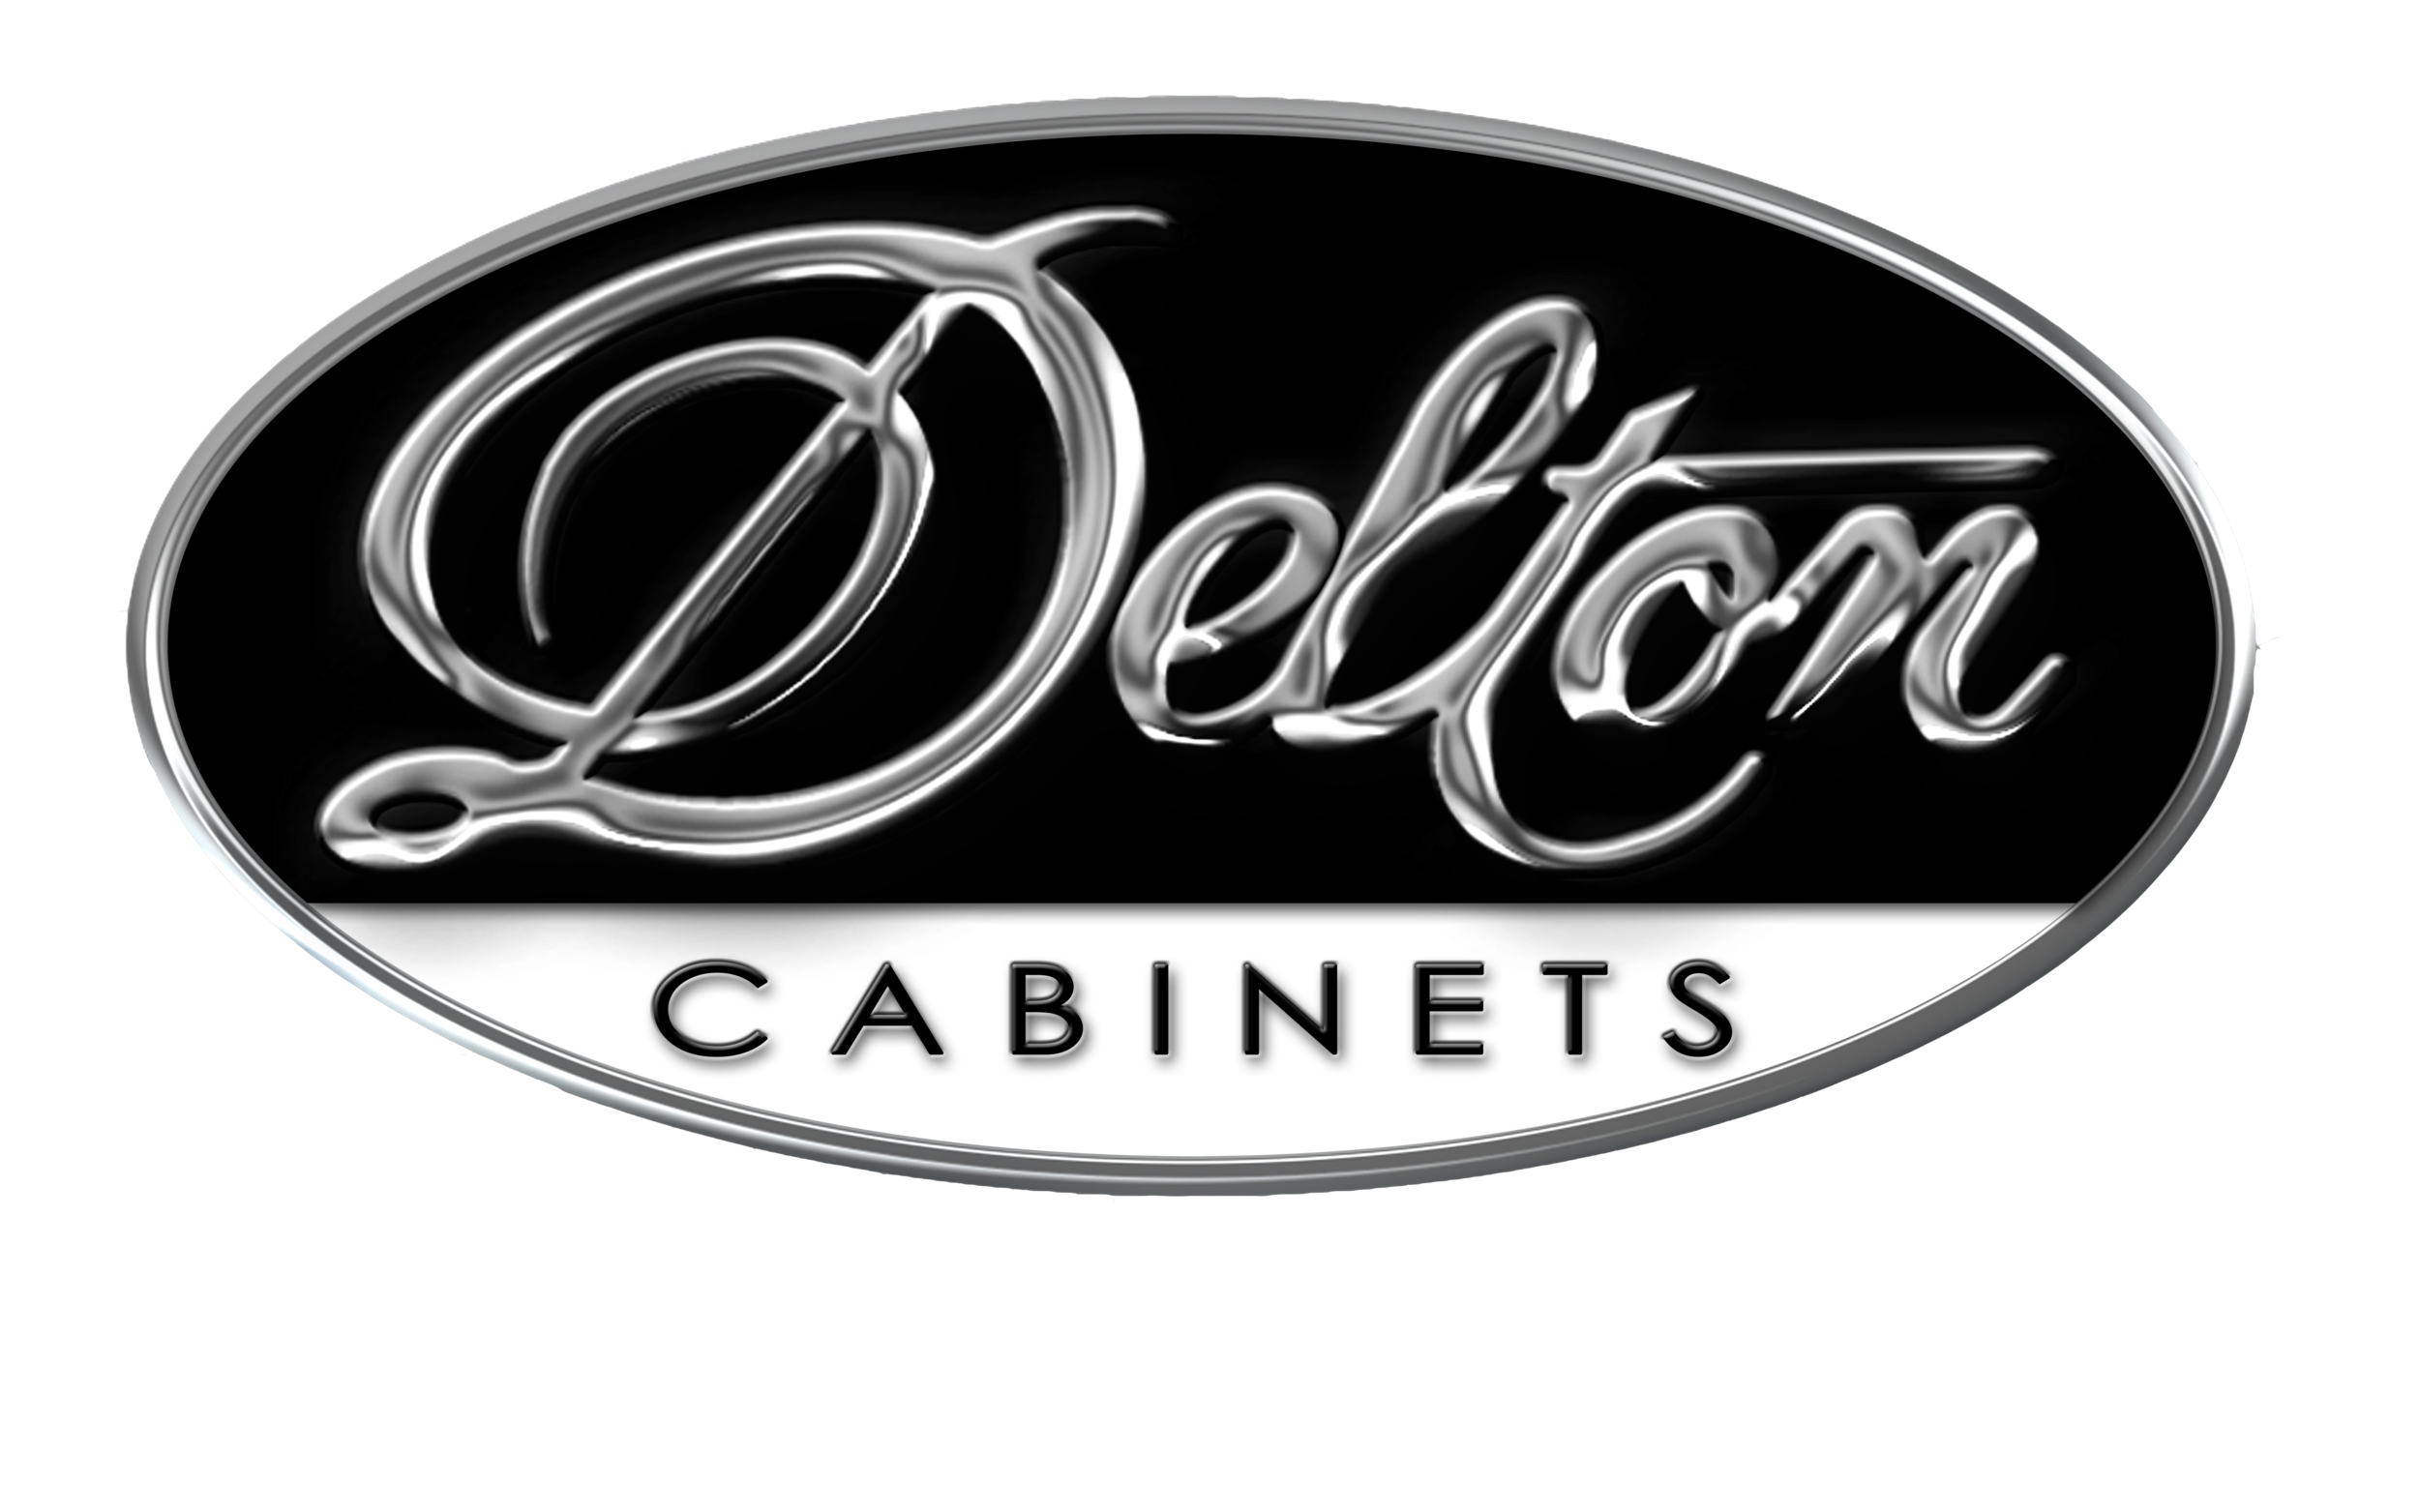 Delton Cabinets